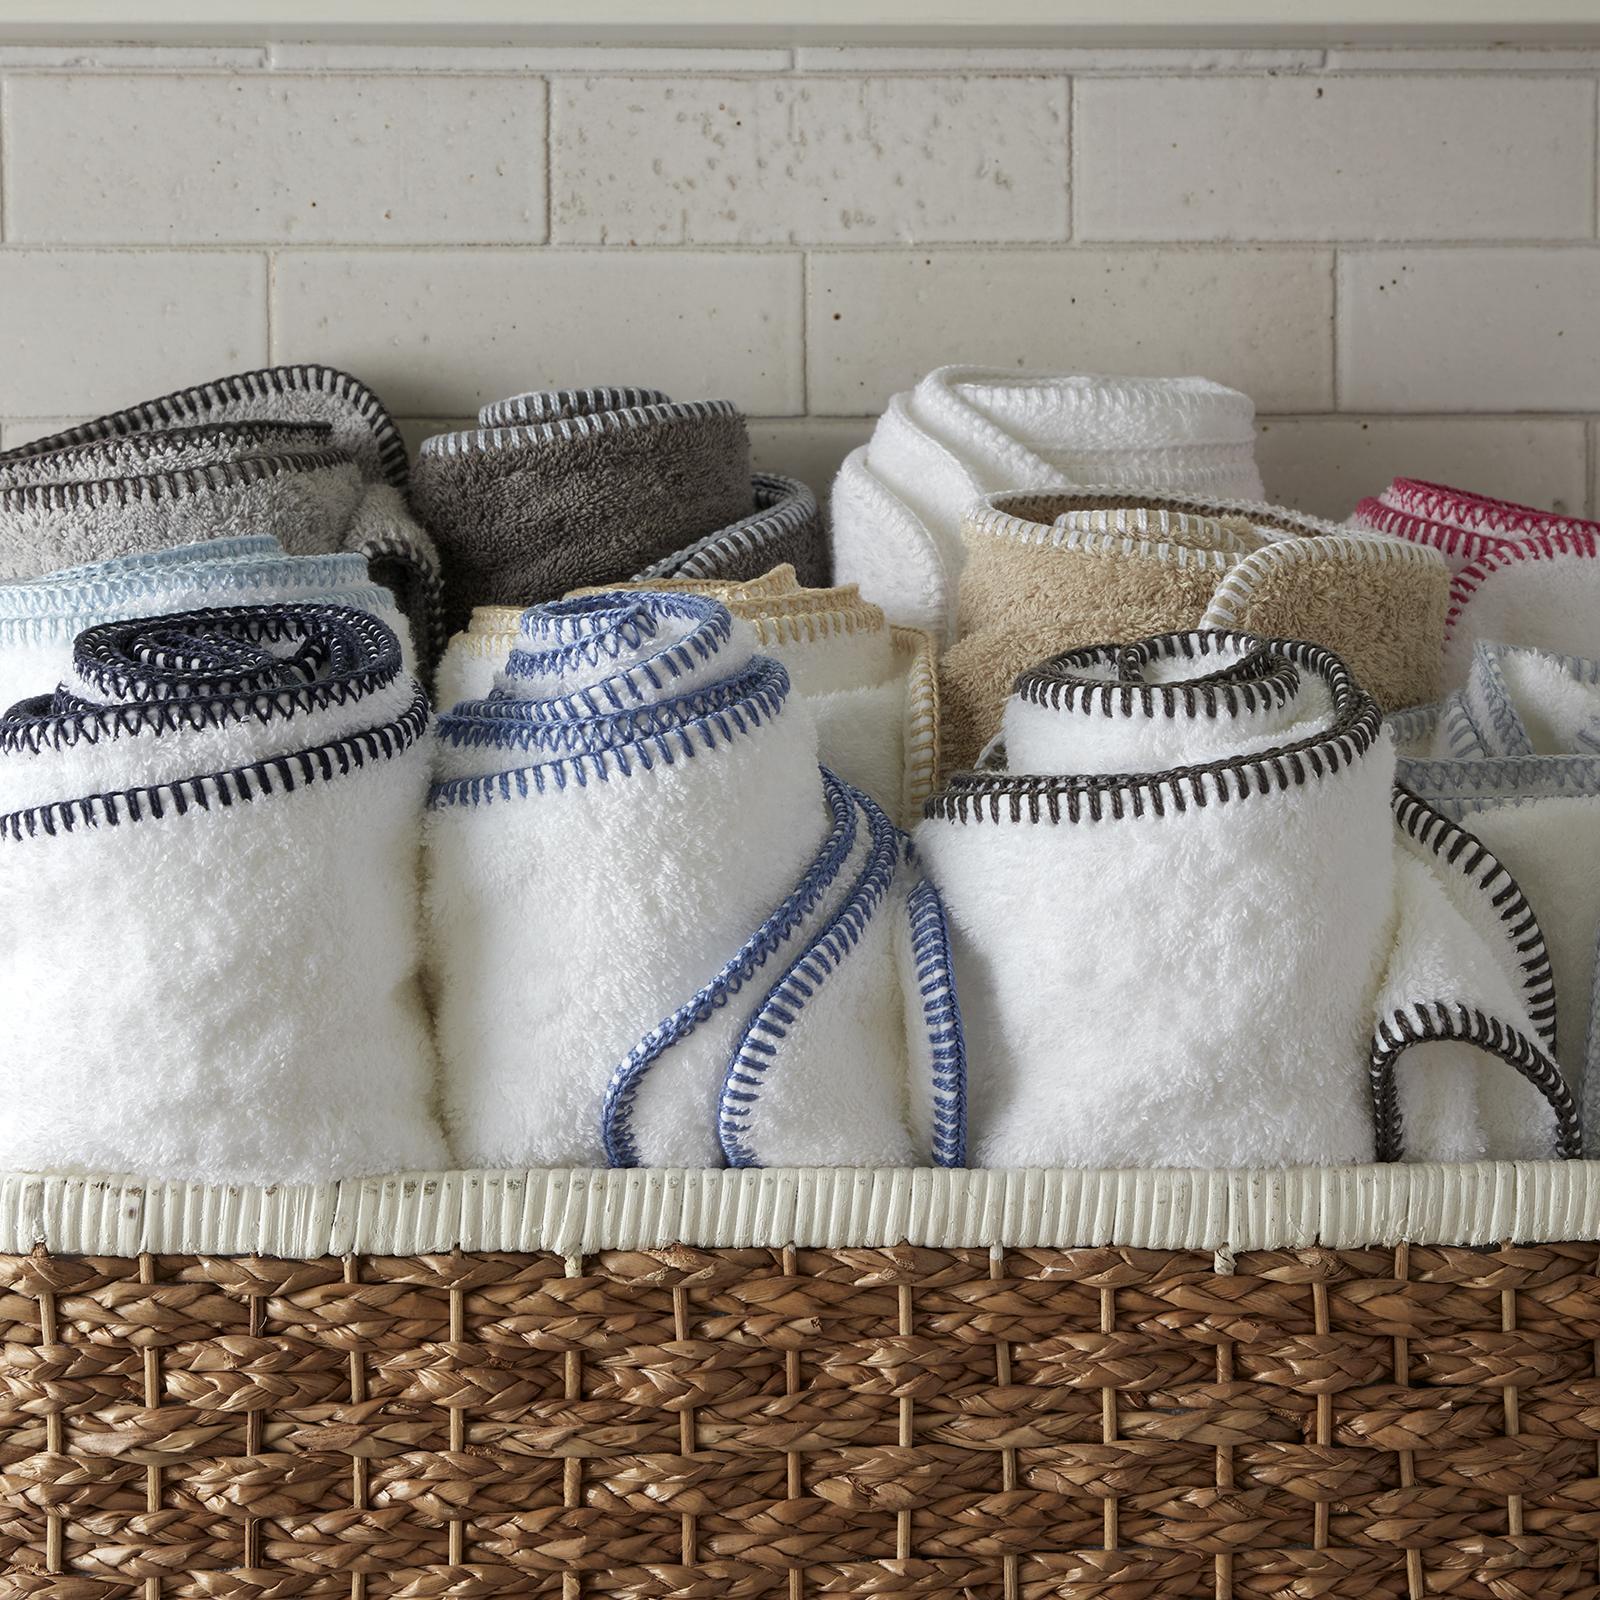 Whipstitch Bath towels by Matouk